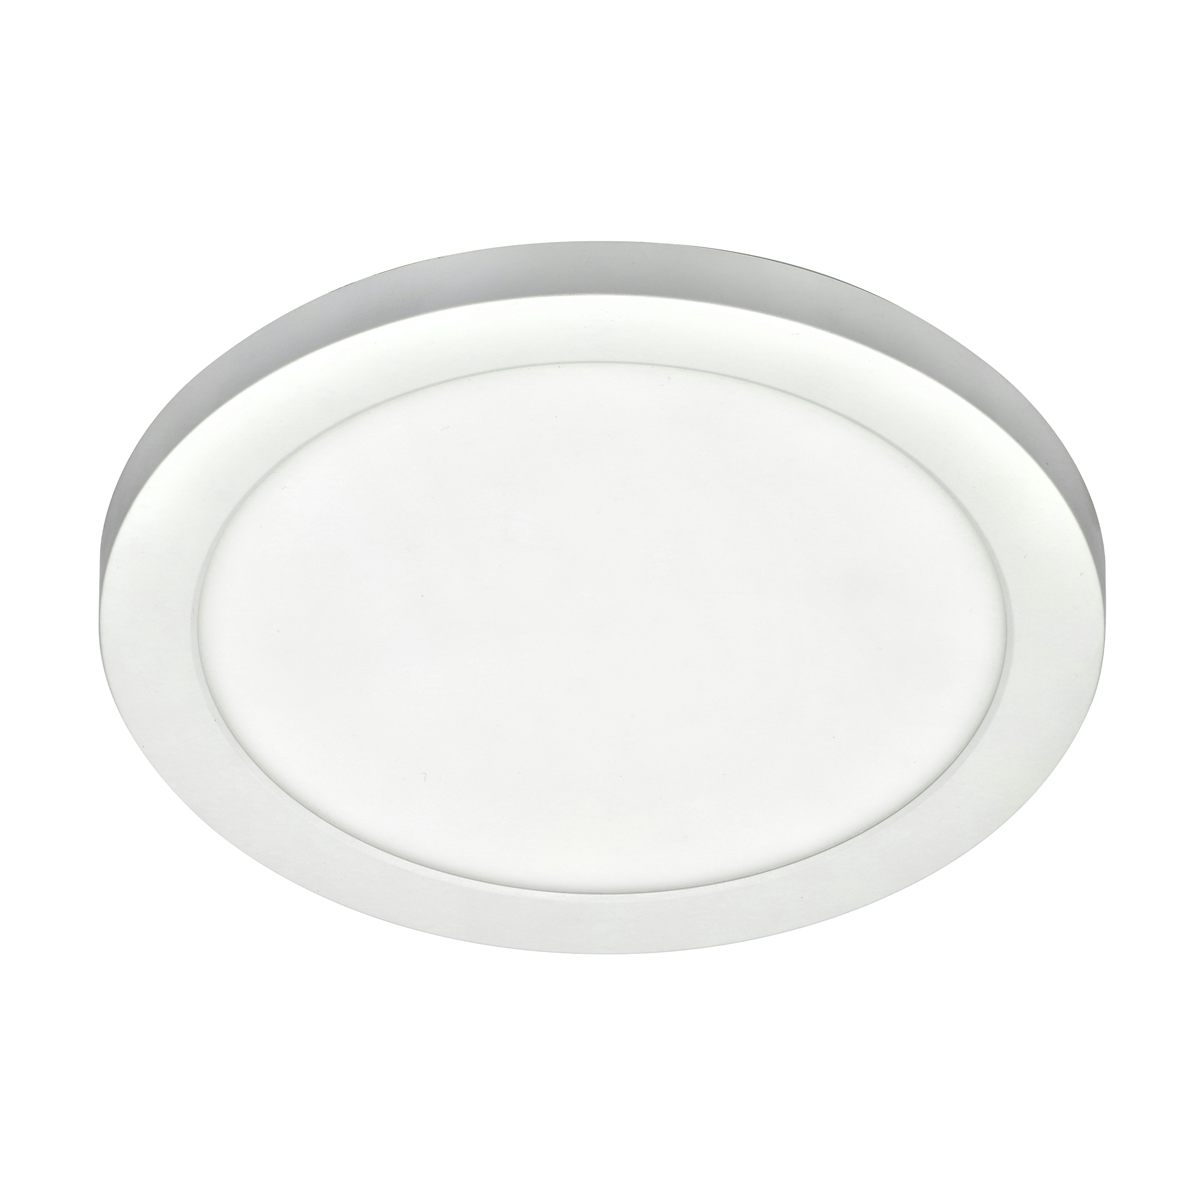 Forum Theta white large round flush bathroom ceiling light